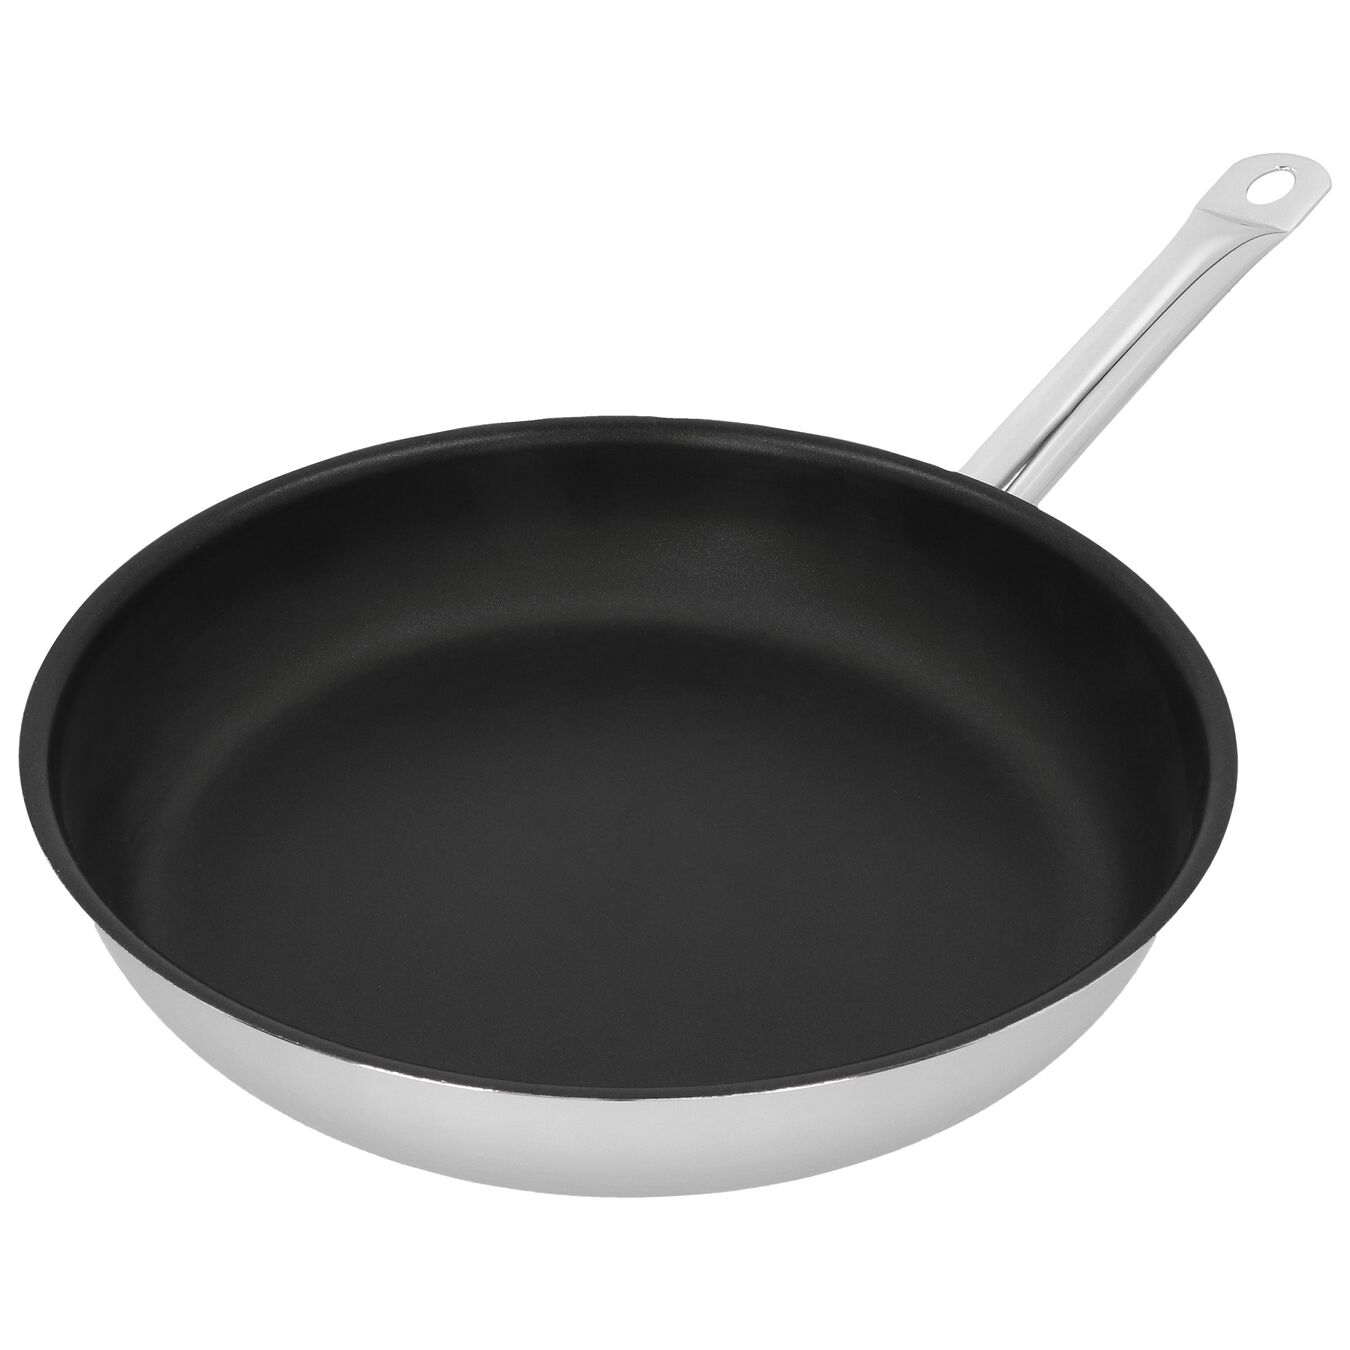 32 cm 18/10 Stainless Steel Frying pan silver-black,,large 4